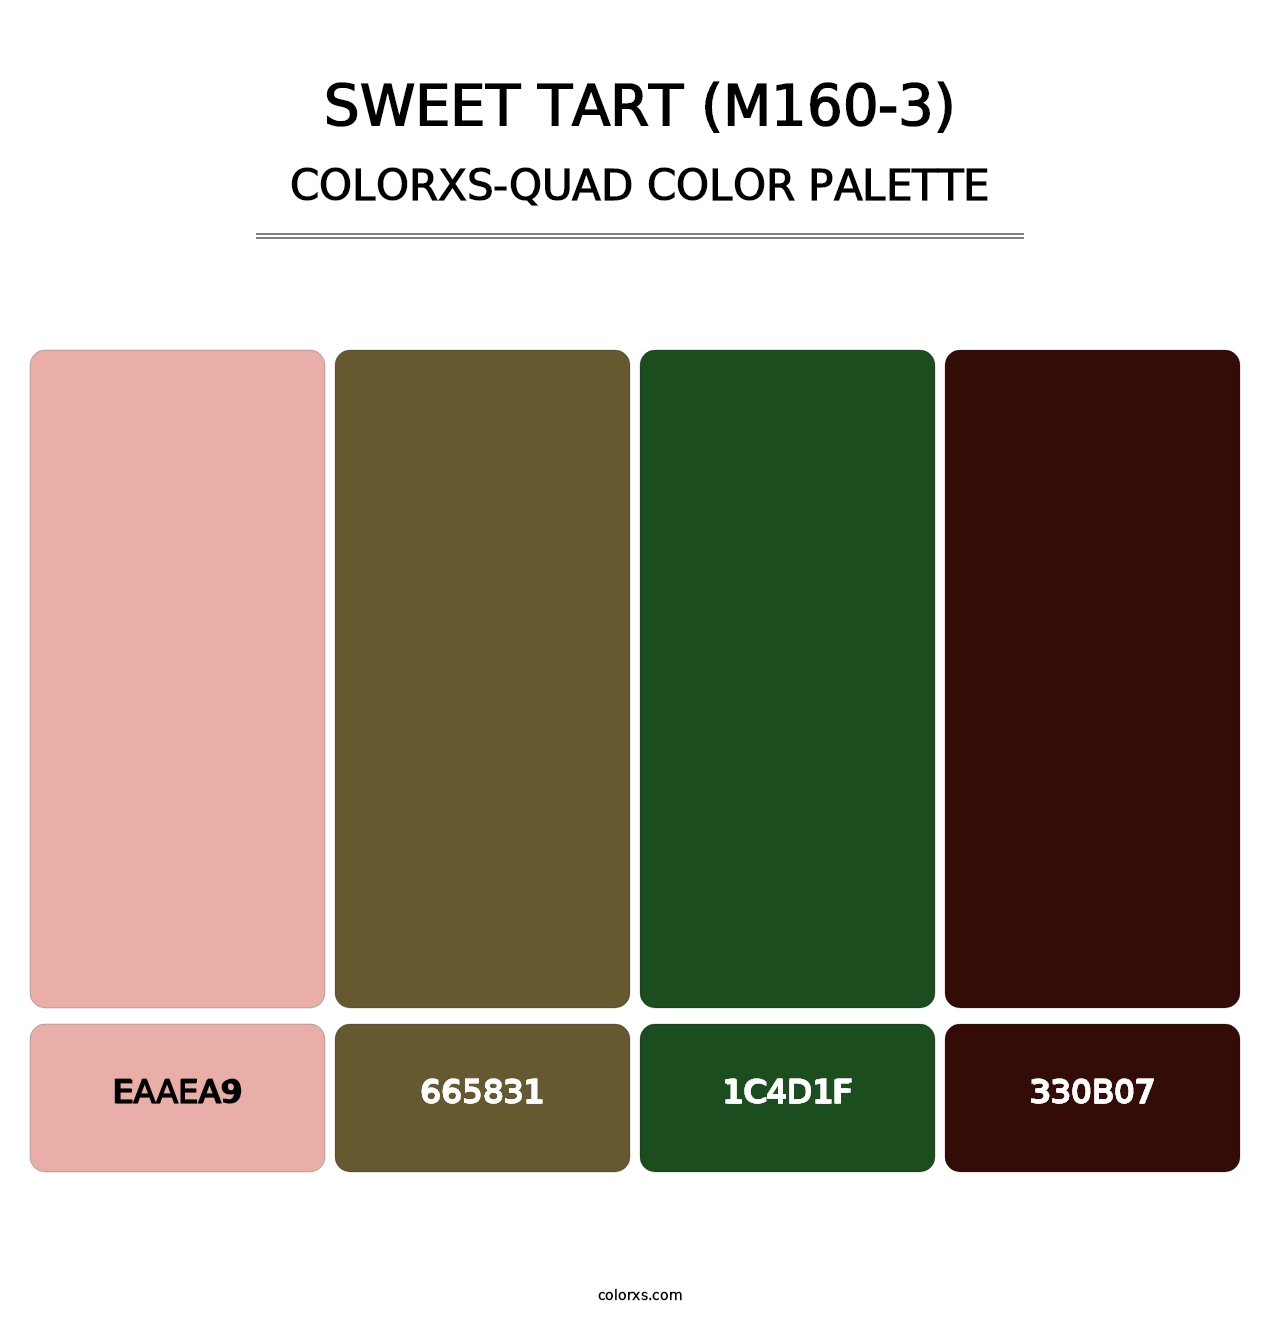 Sweet Tart (M160-3) - Colorxs Quad Palette